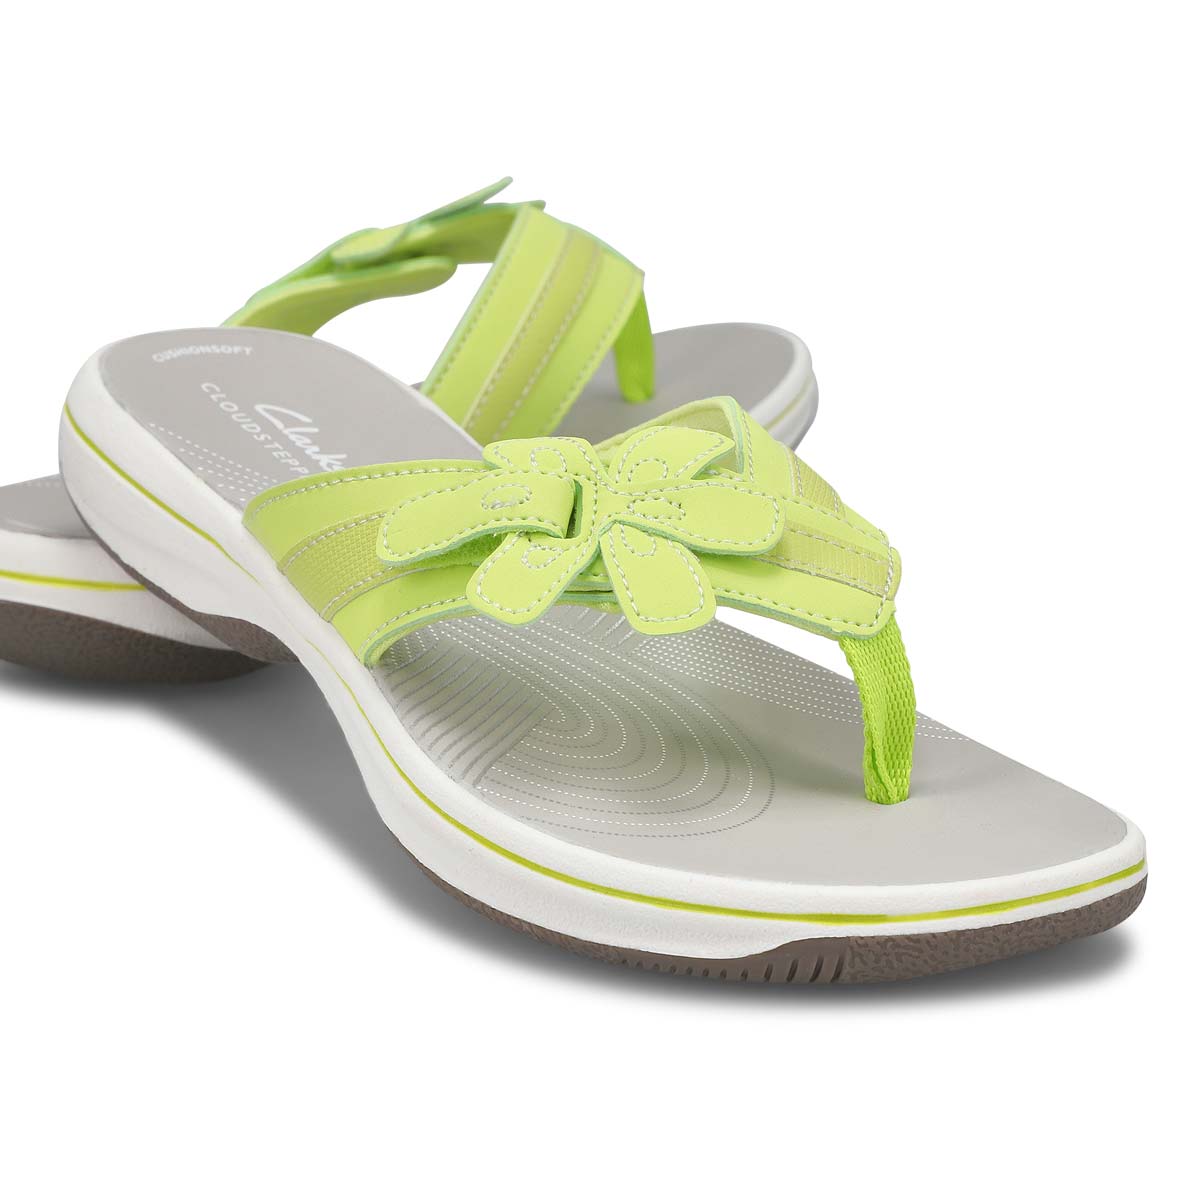 Clarks Women's Brinkley Thong Casual Sandal - | SoftMoc.com